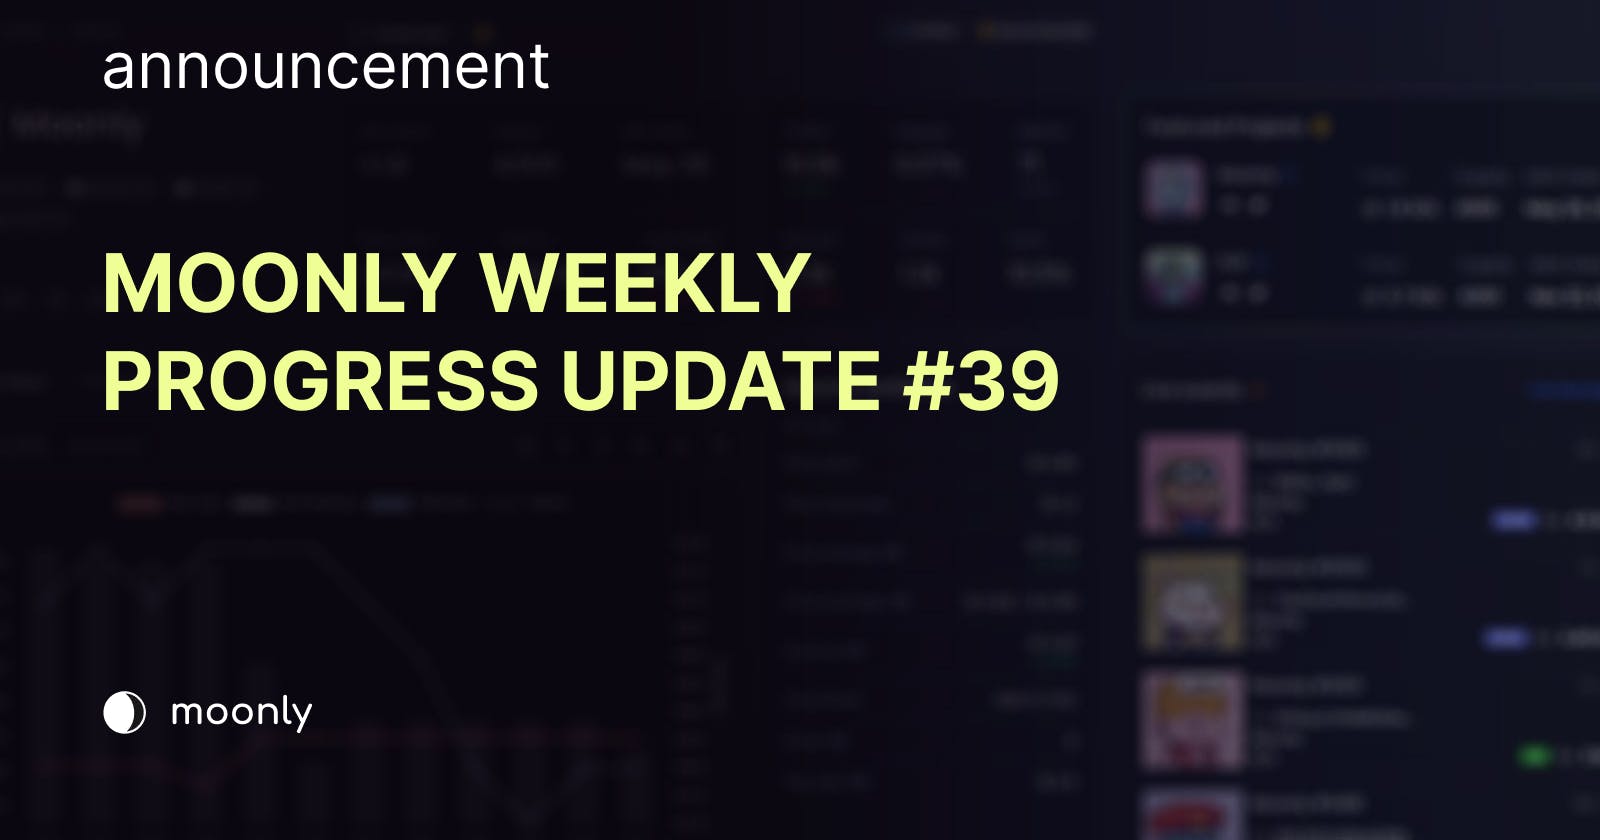 Moonly weekly progress update #39